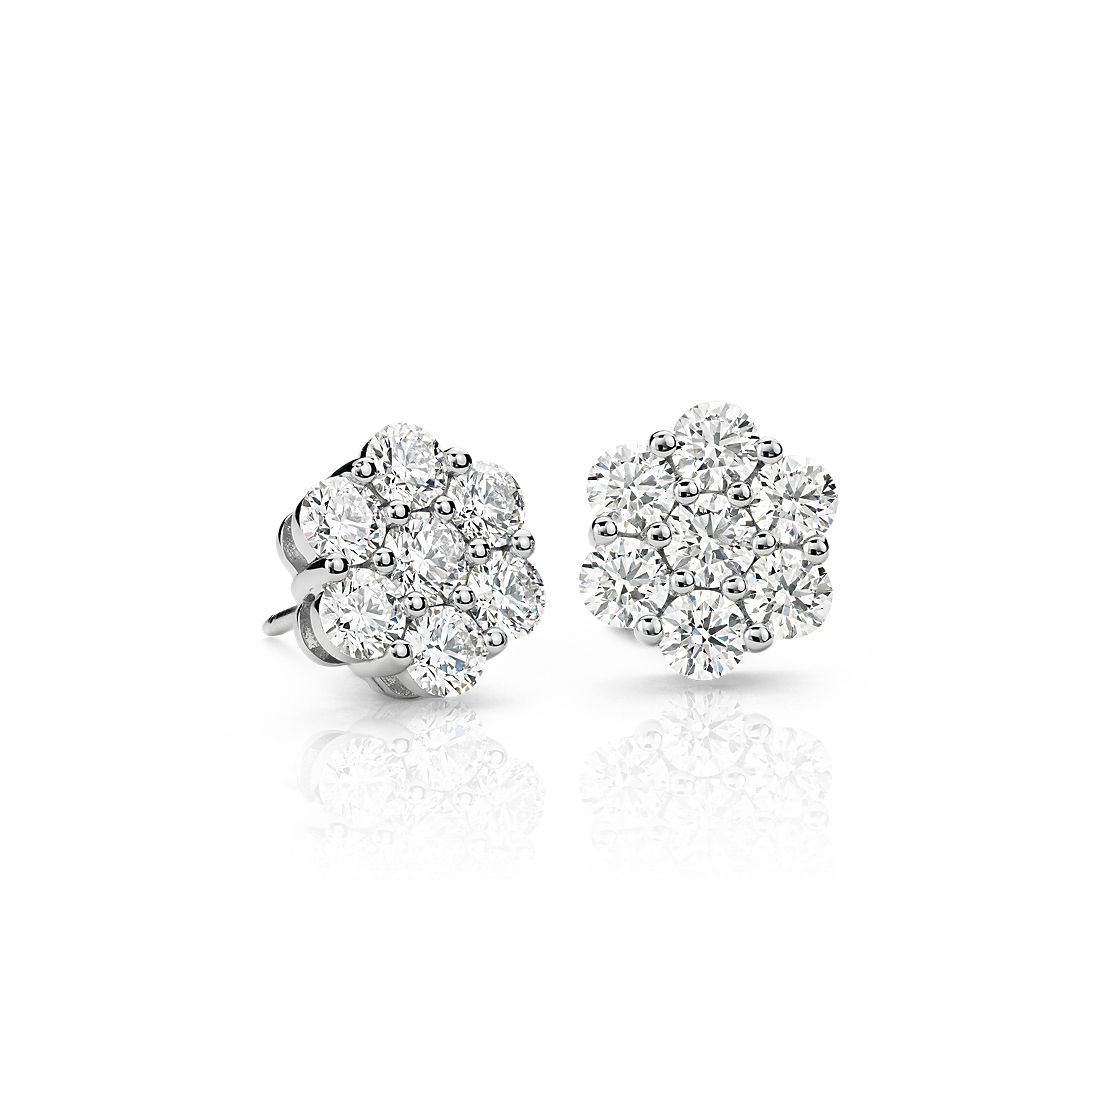 Blue Nile Signature Diamond Floral Stud Earrings in Platinum (2 1/6 ct. tw.)